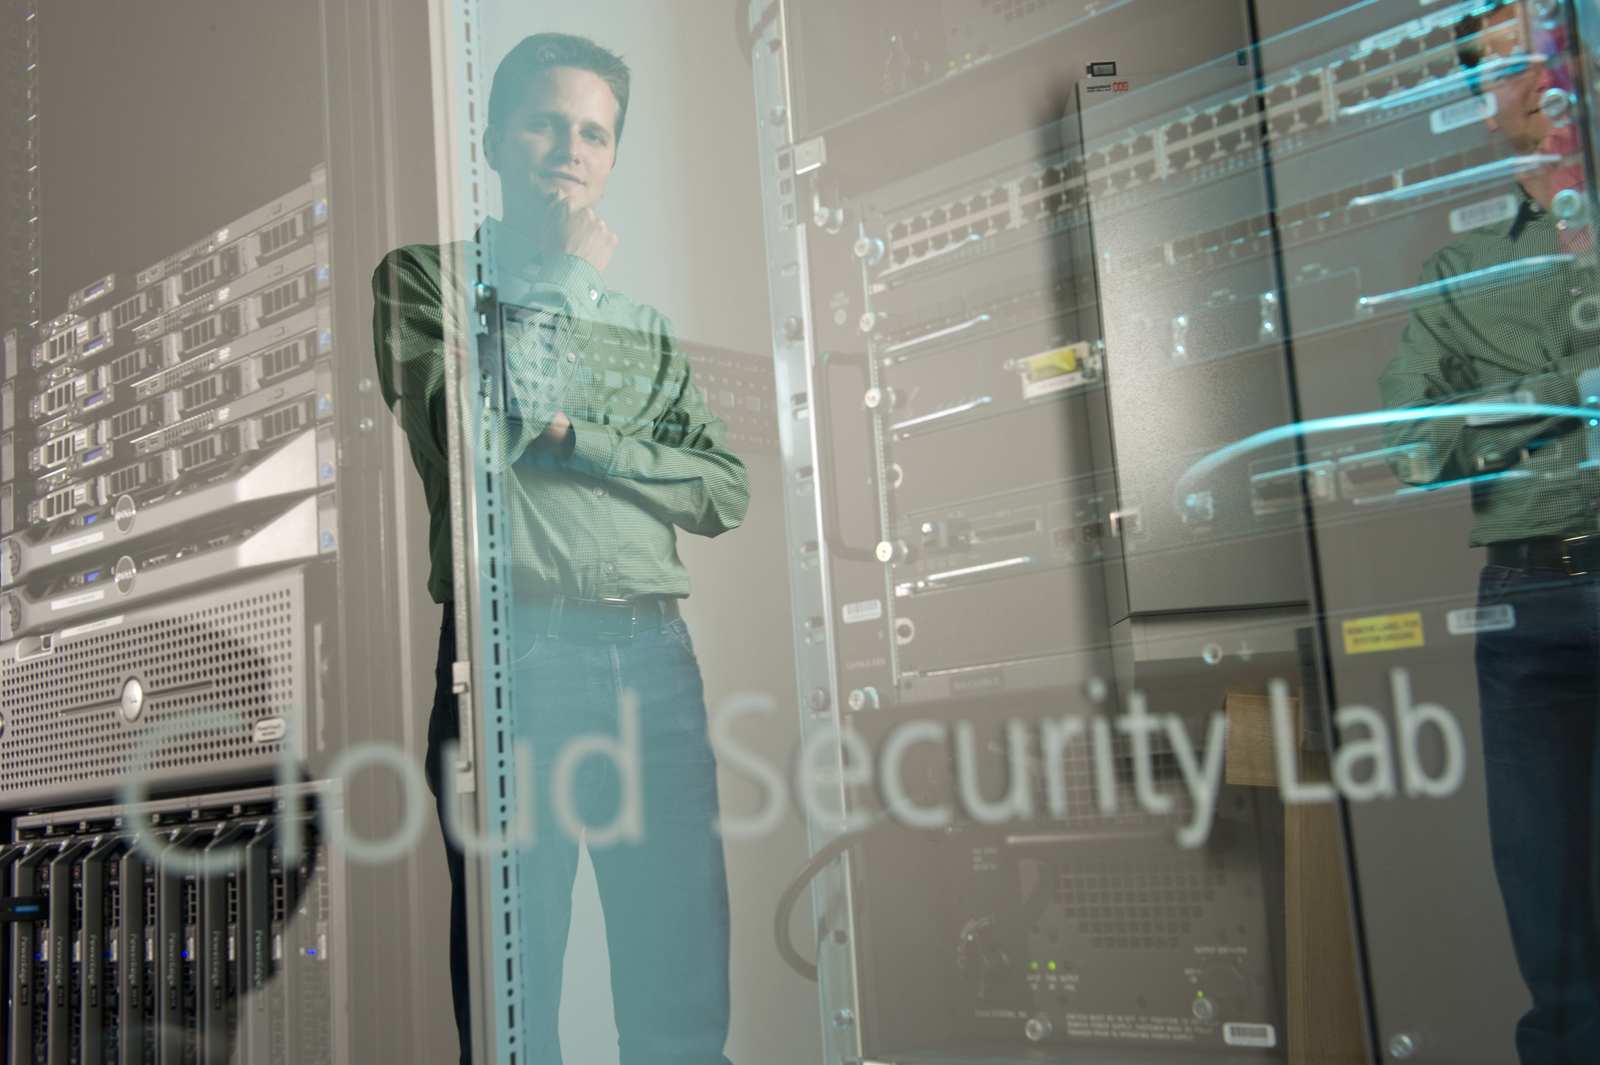 Image: Cloud security lab